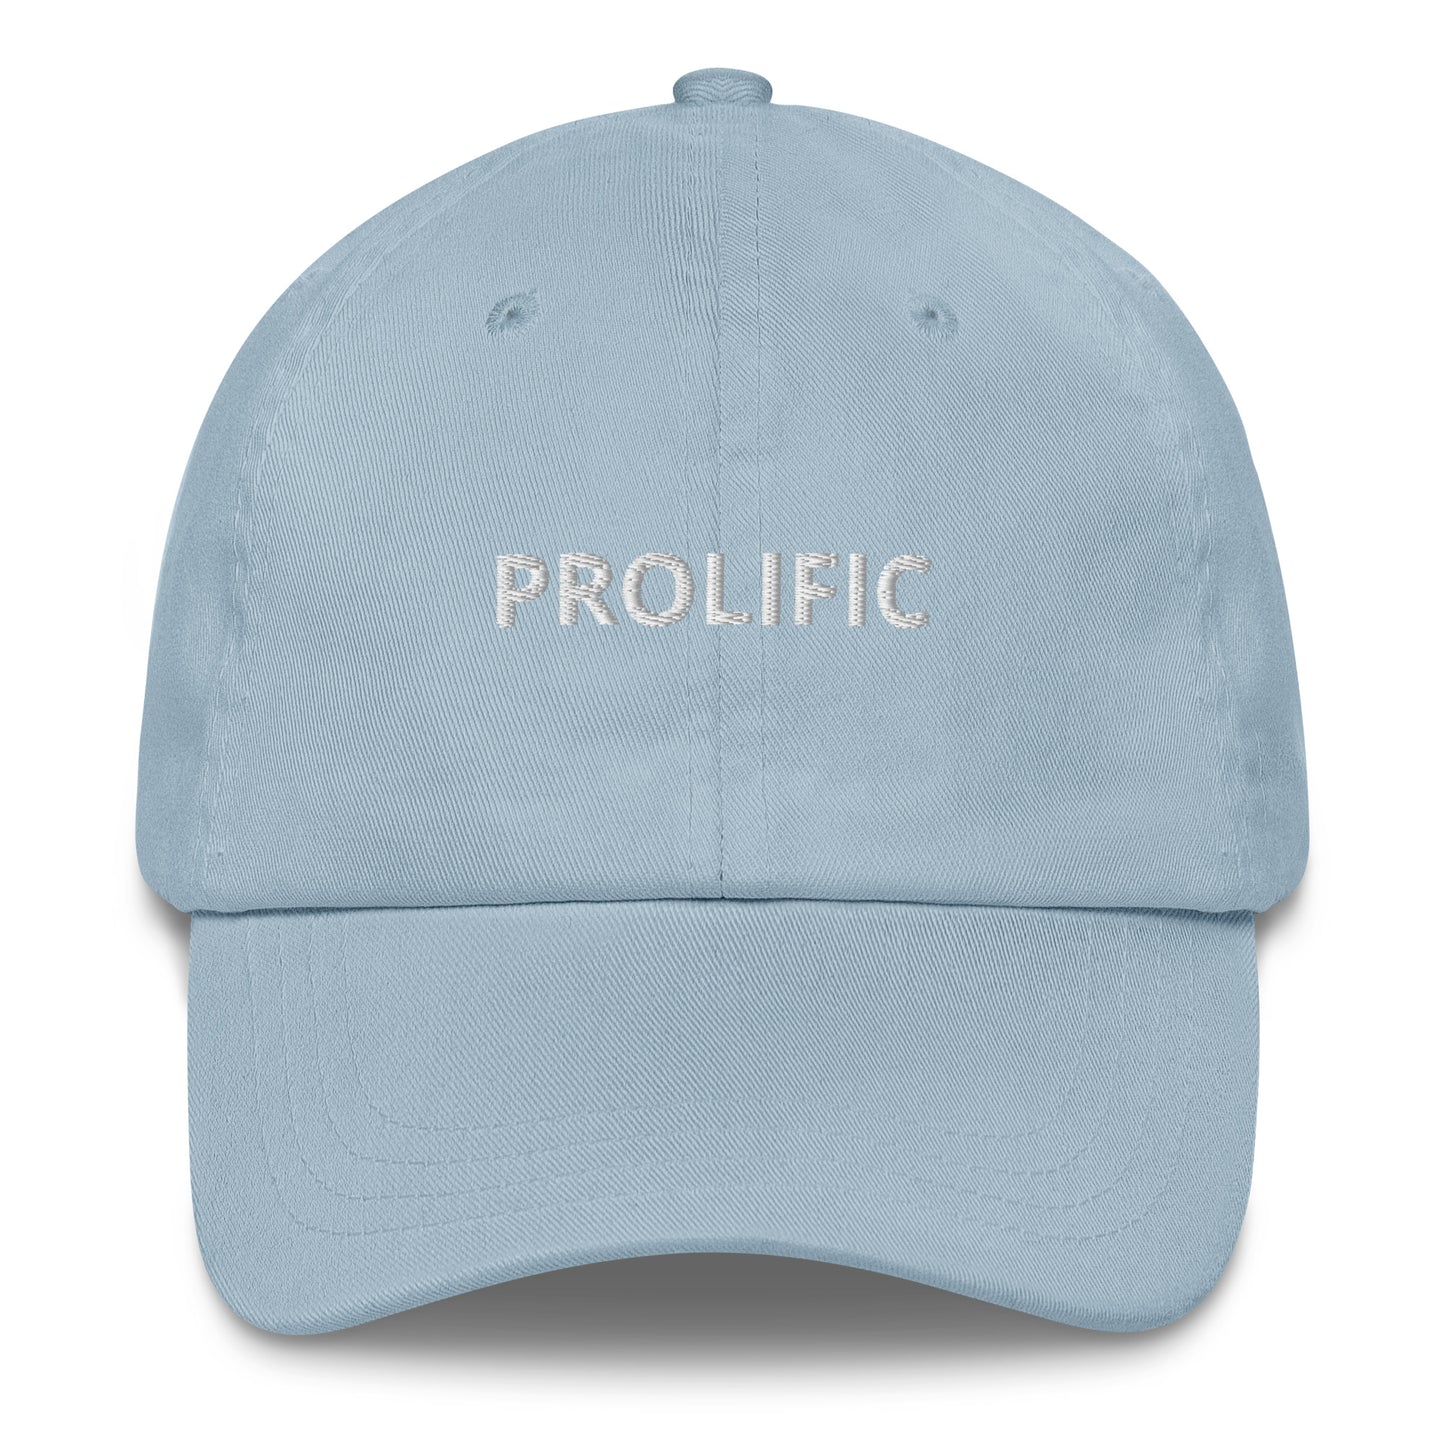 PROLIFIC hat